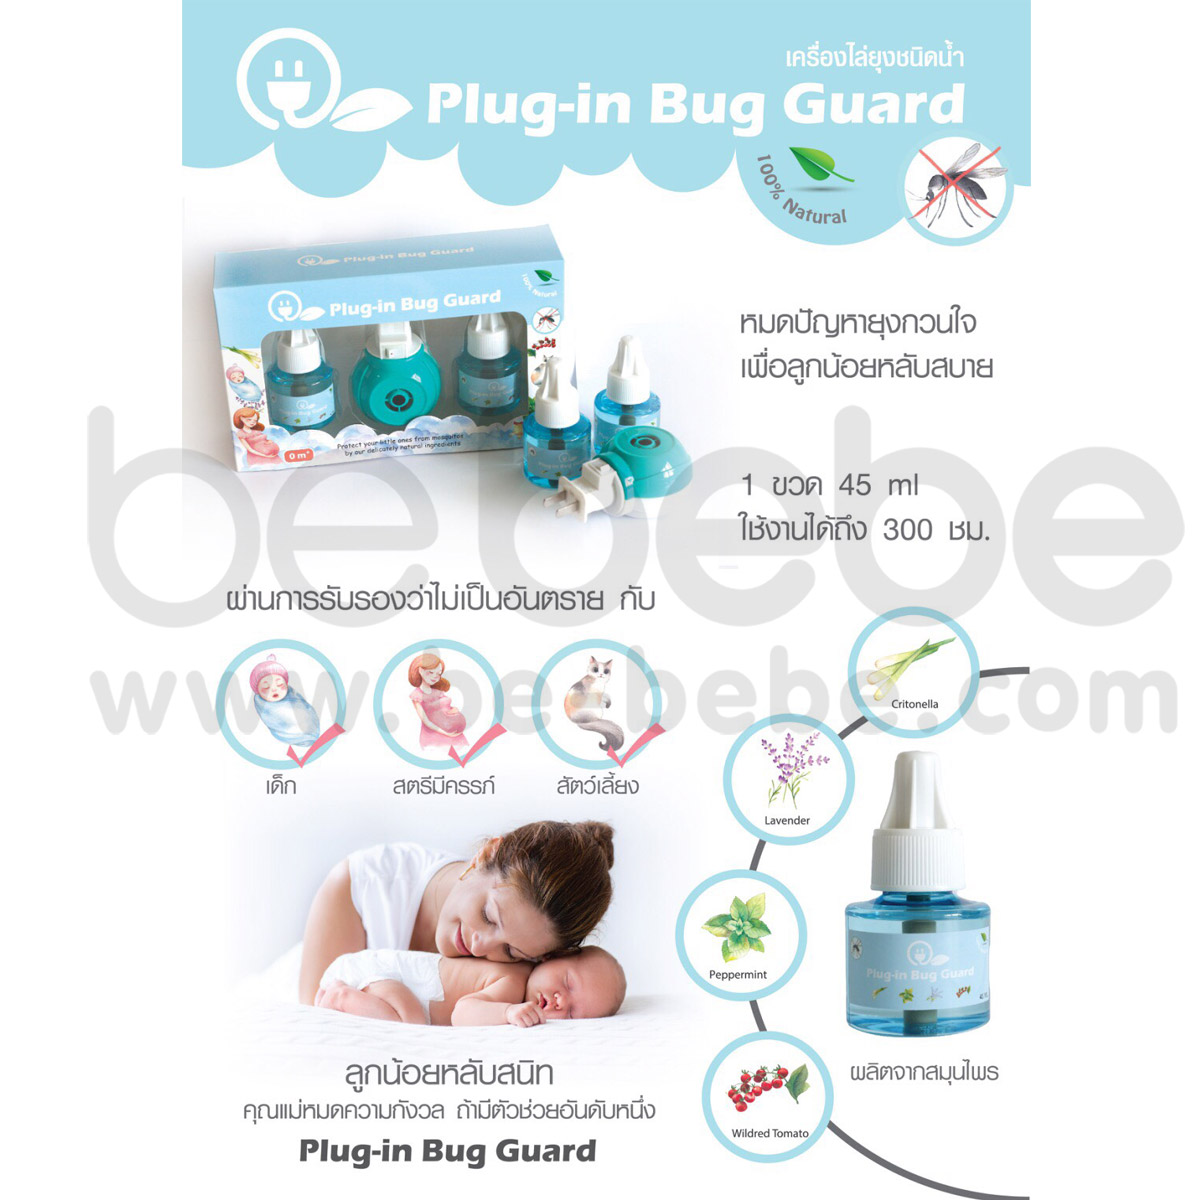 Plug-in Bug Guard ผลิตภัณฑ์ไล่ยุงชนิดน้ำจากธรรมชาติ 100 %